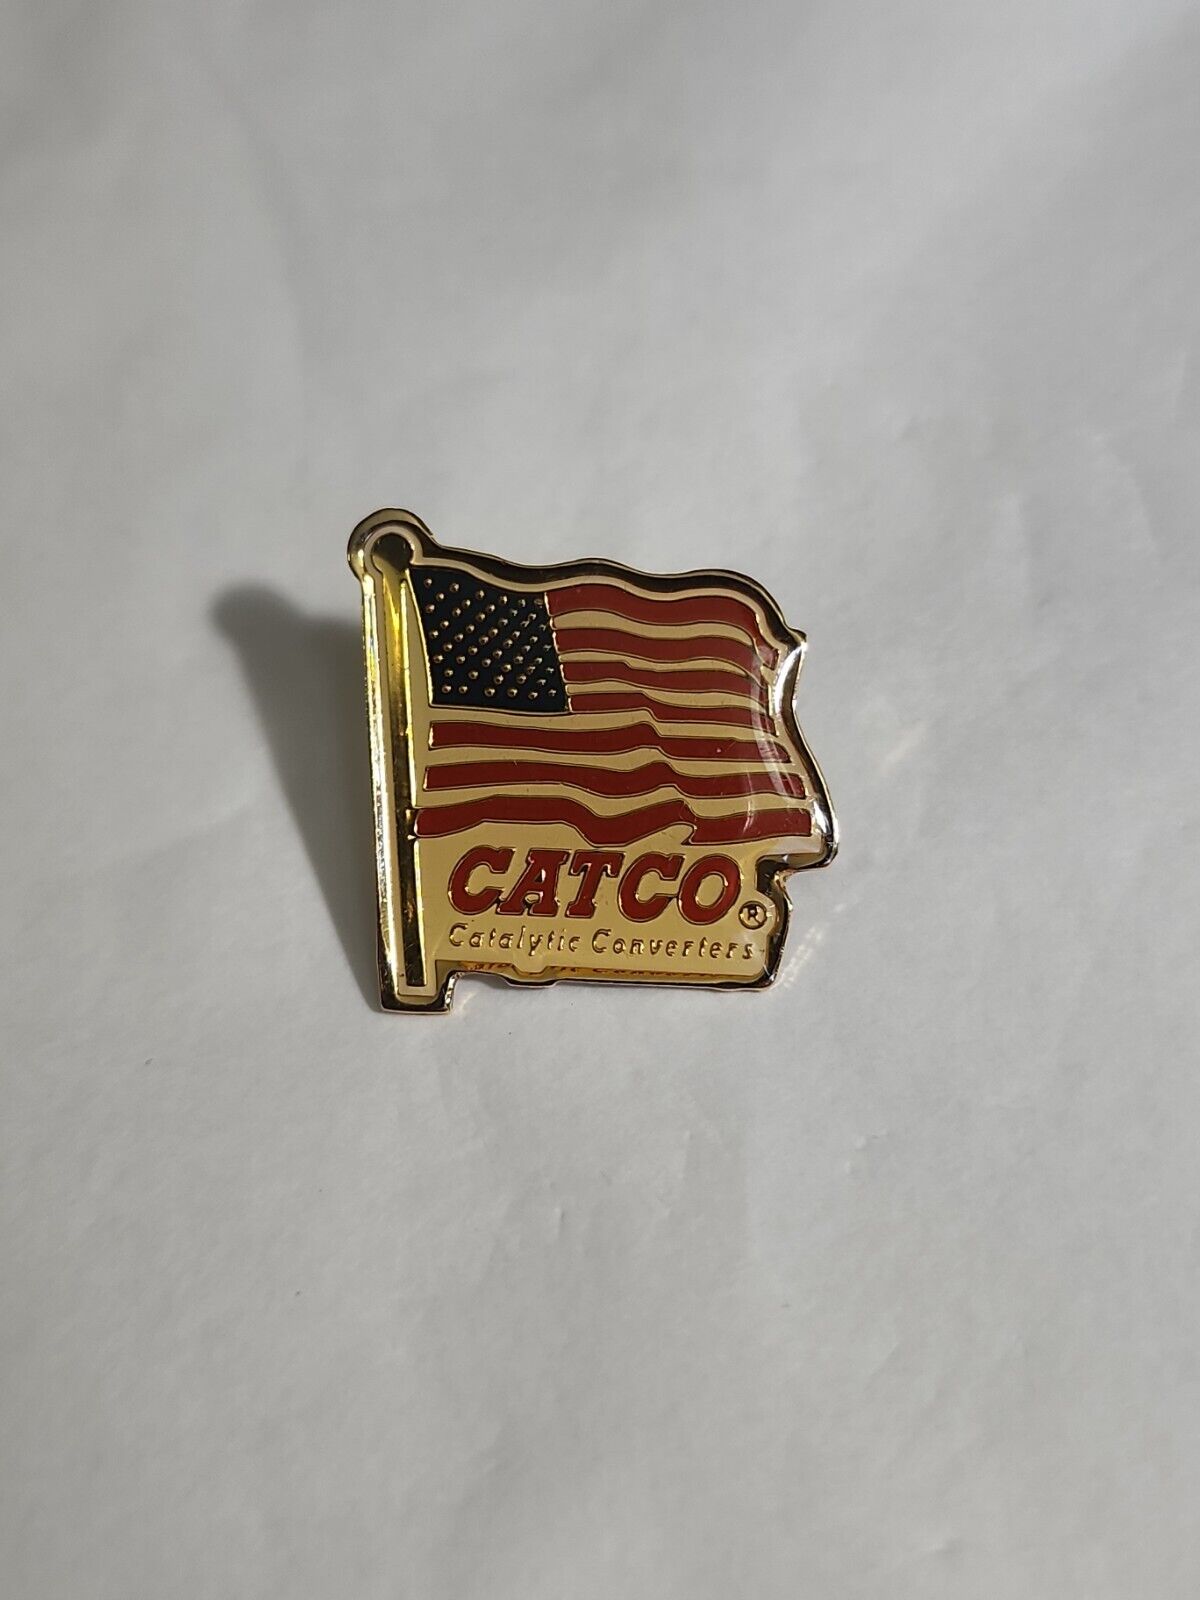 CATCO CatalyticConverters Lapel Pin American Flag Rare